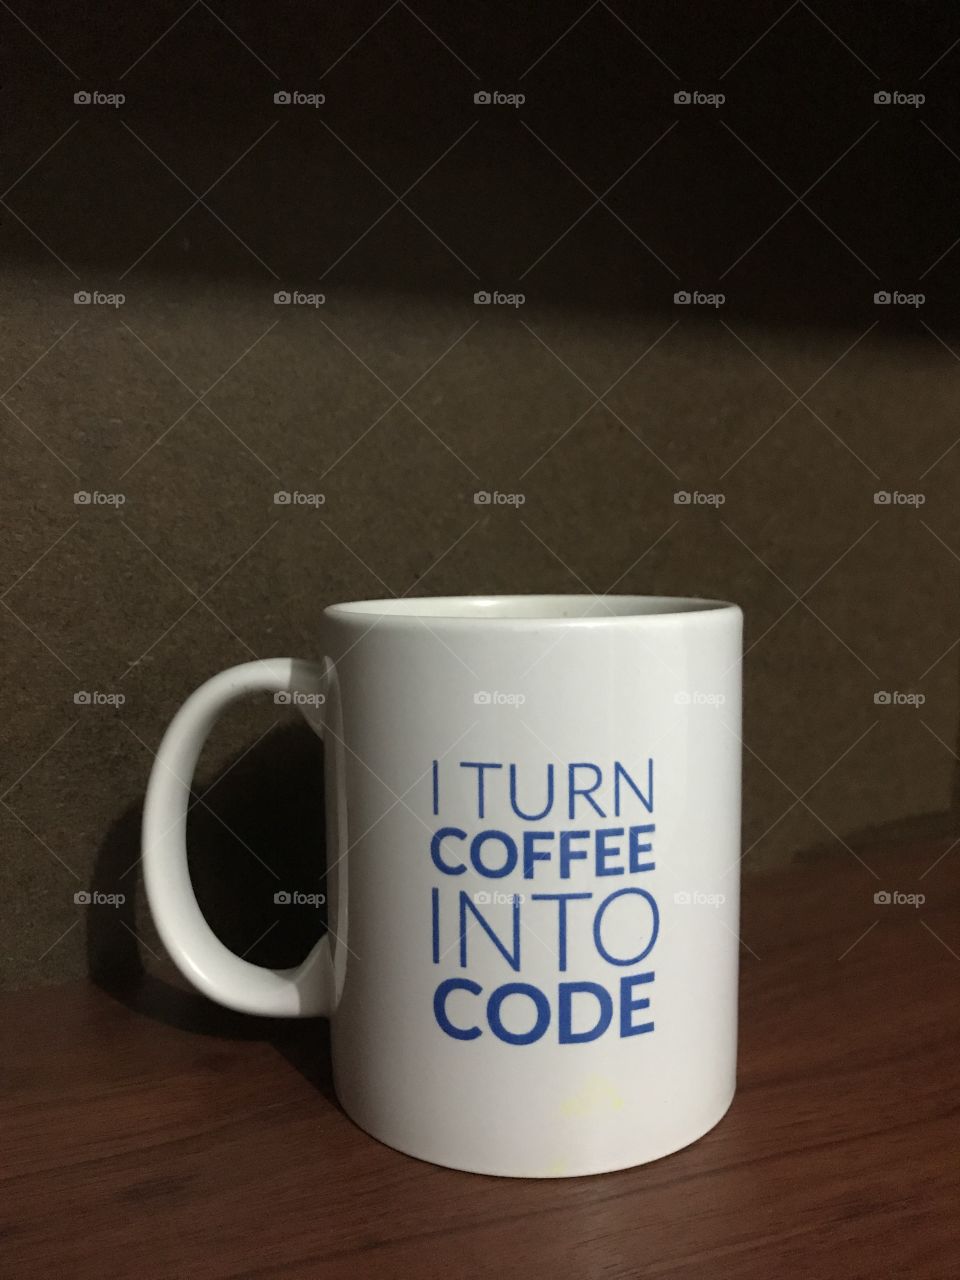 Mug of coffee for developers 